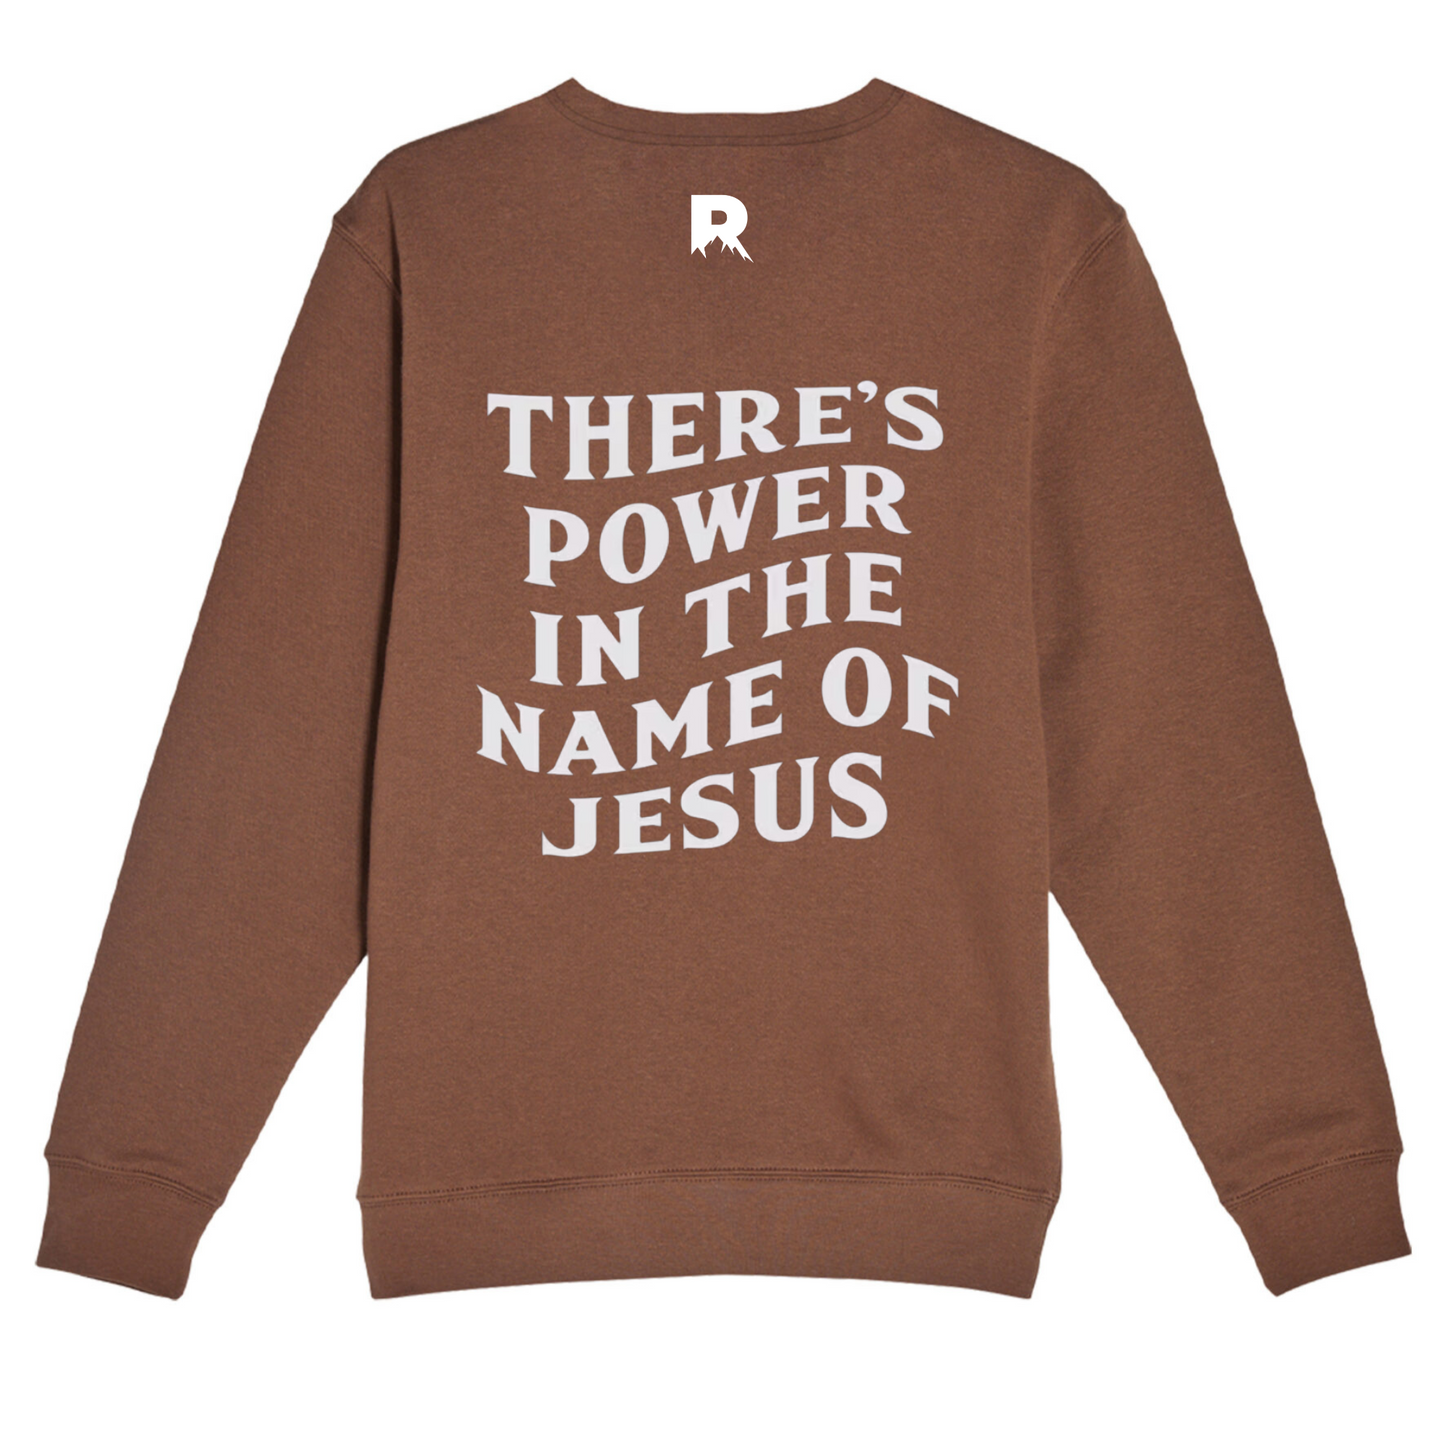 In Jesus' Name Crew Neck Sweater